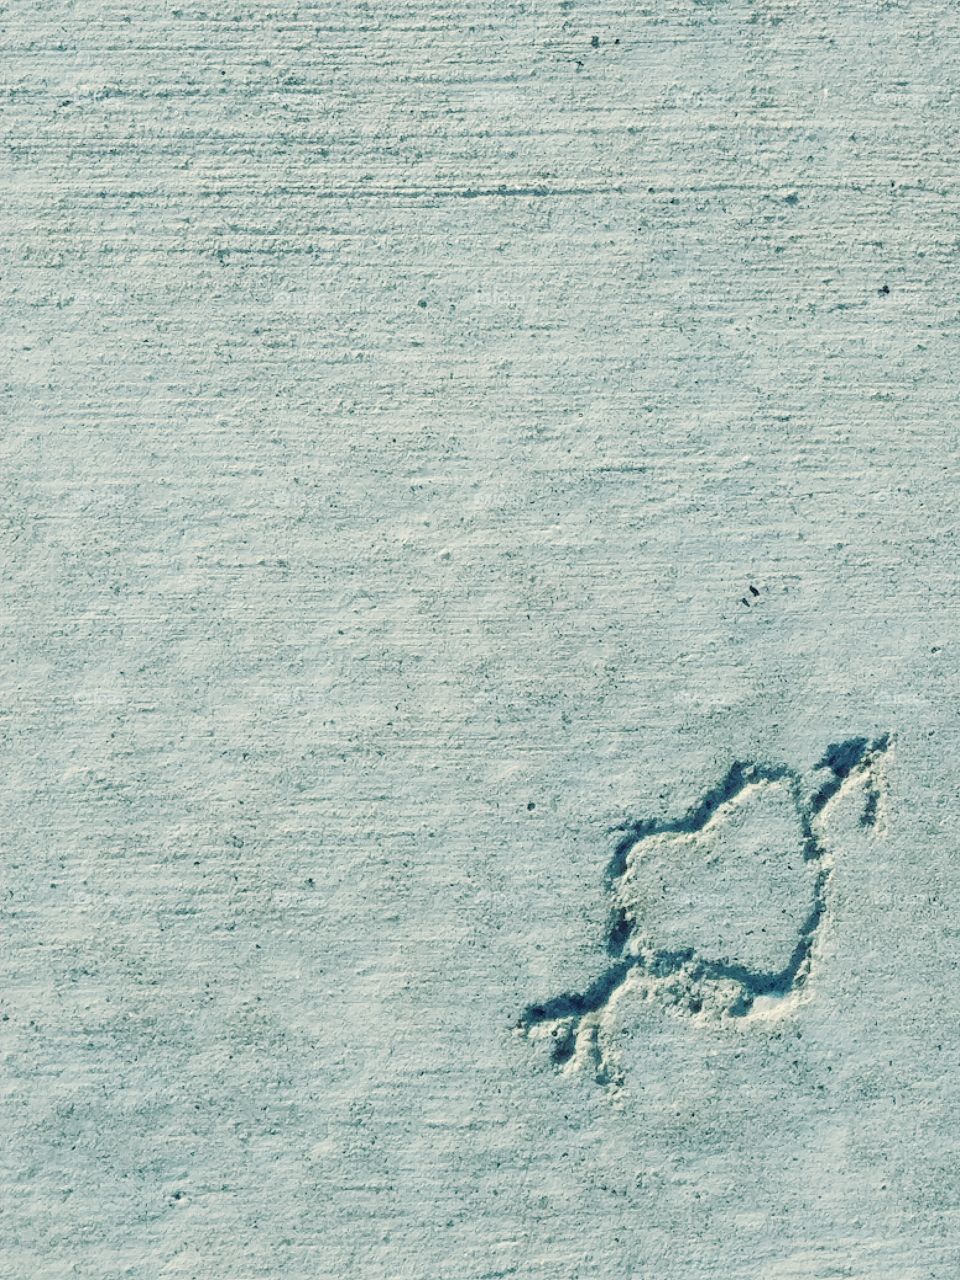 graffiti cement heart